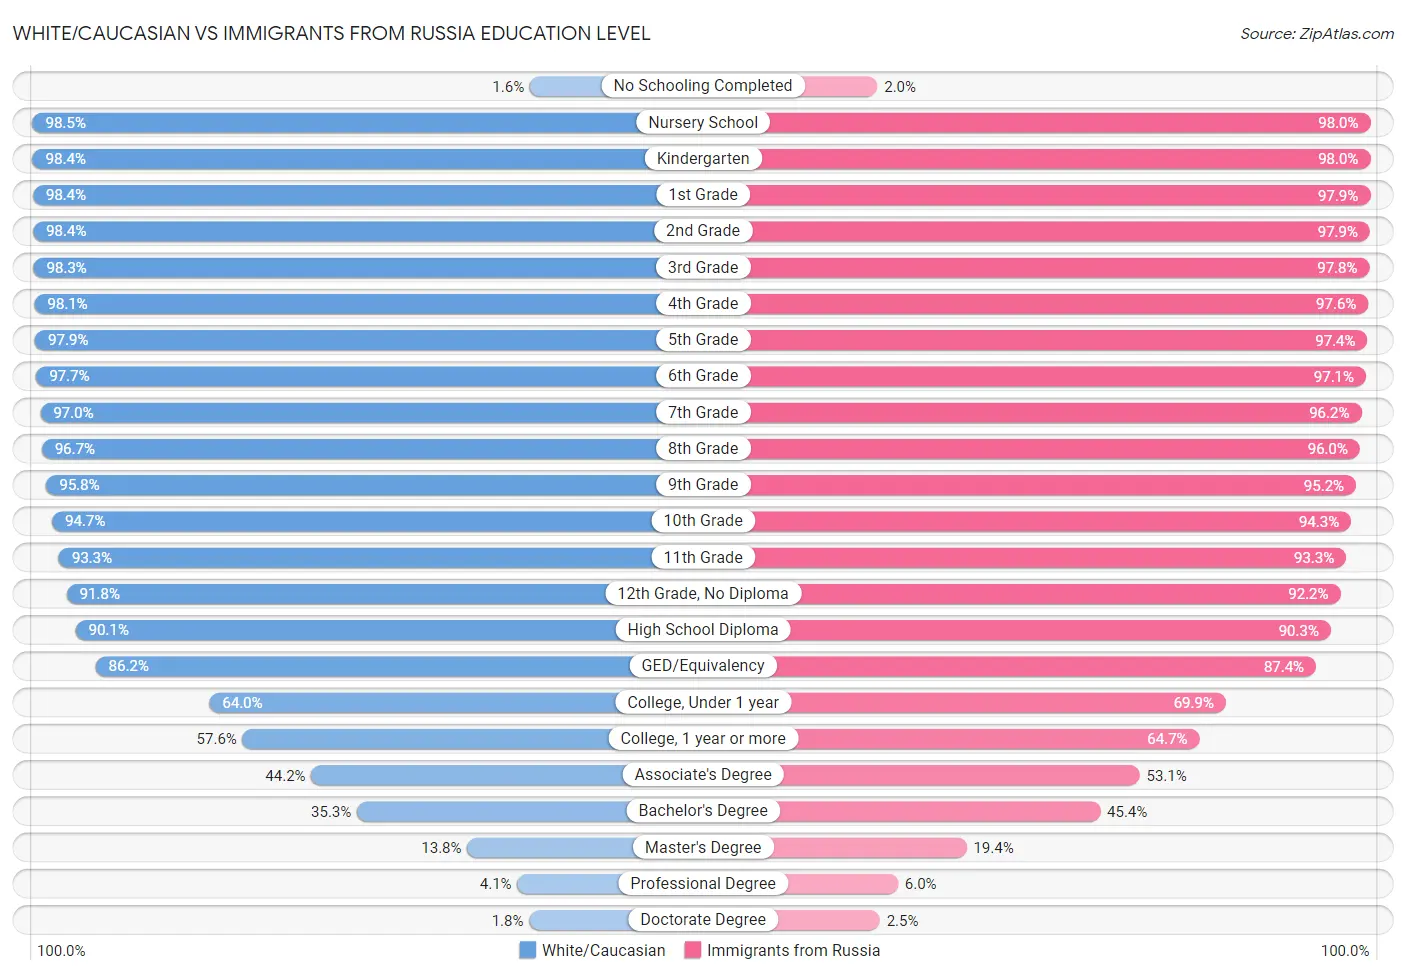 White/Caucasian vs Immigrants from Russia Education Level